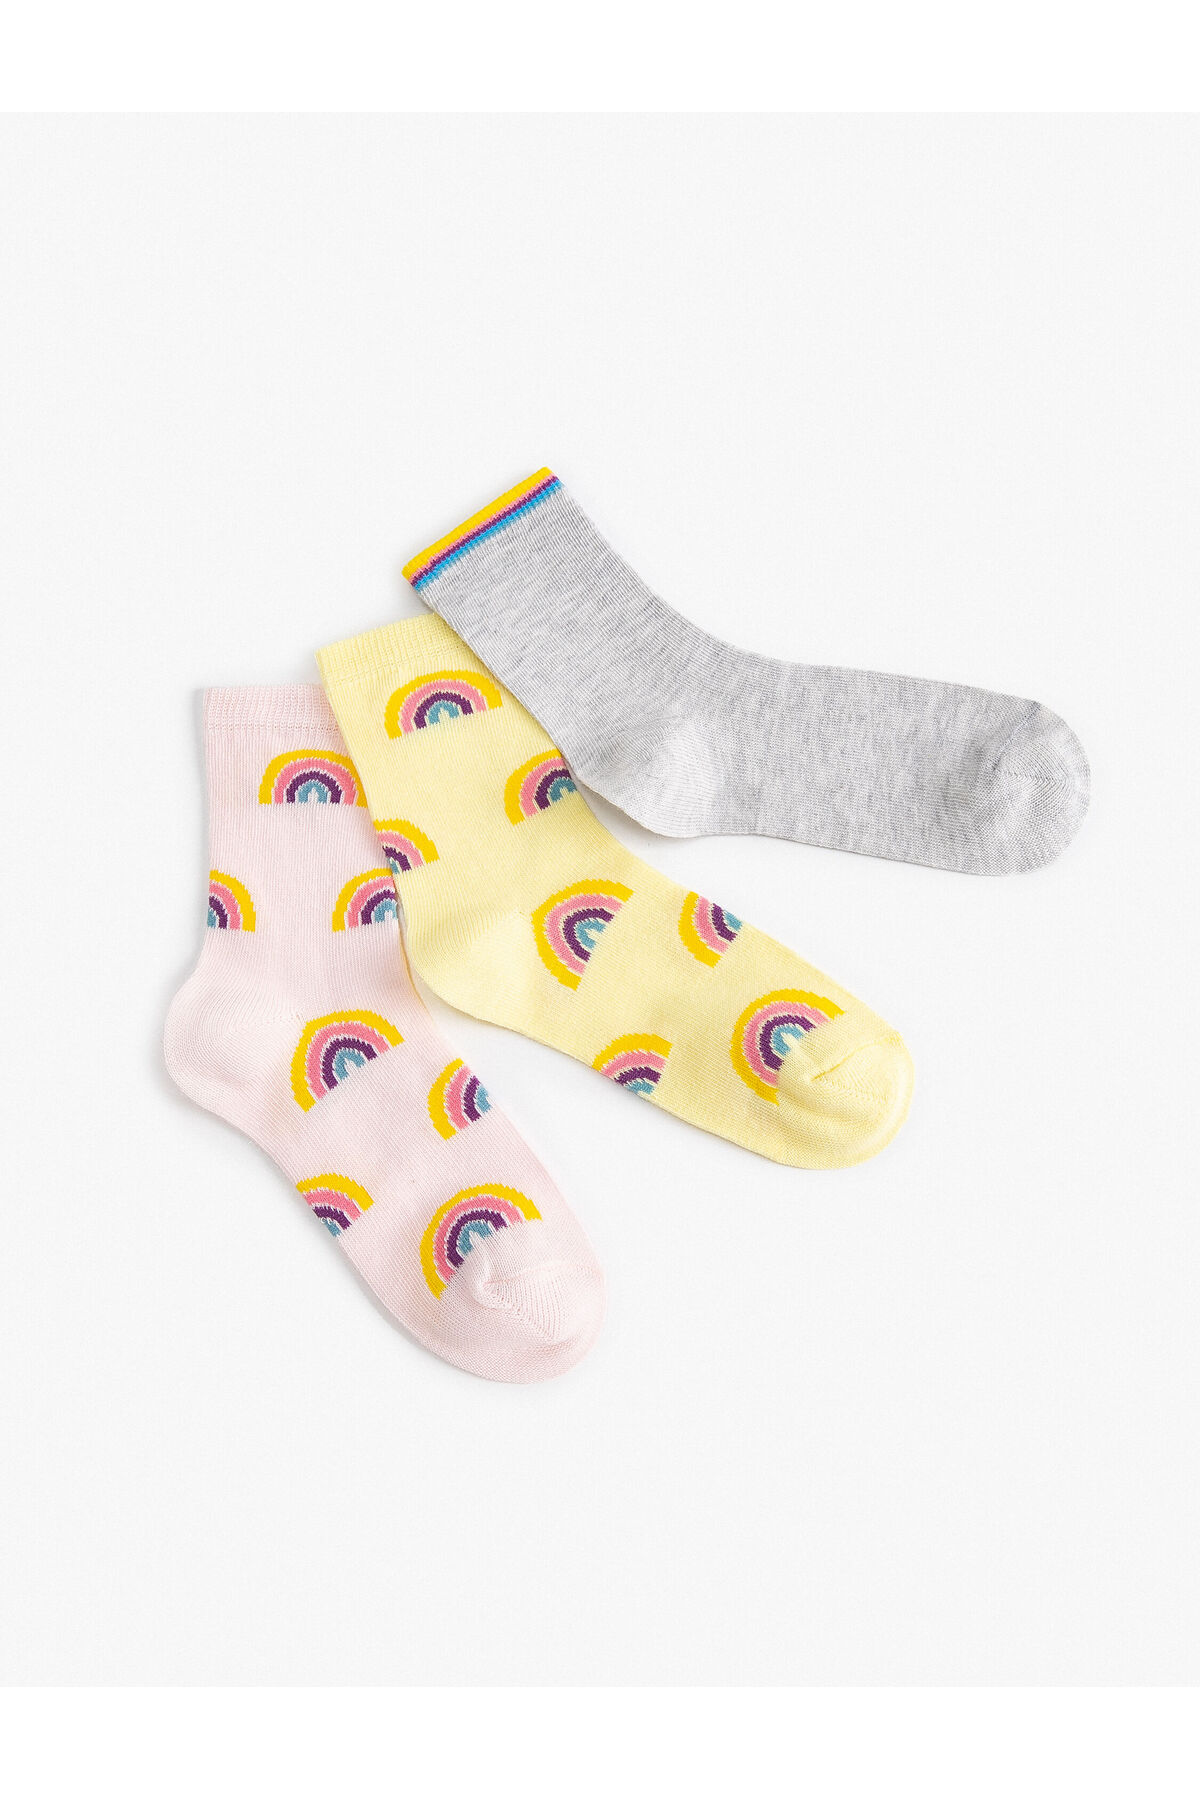 Koton Set of 3 Socks Rainbow Patterned Cotton